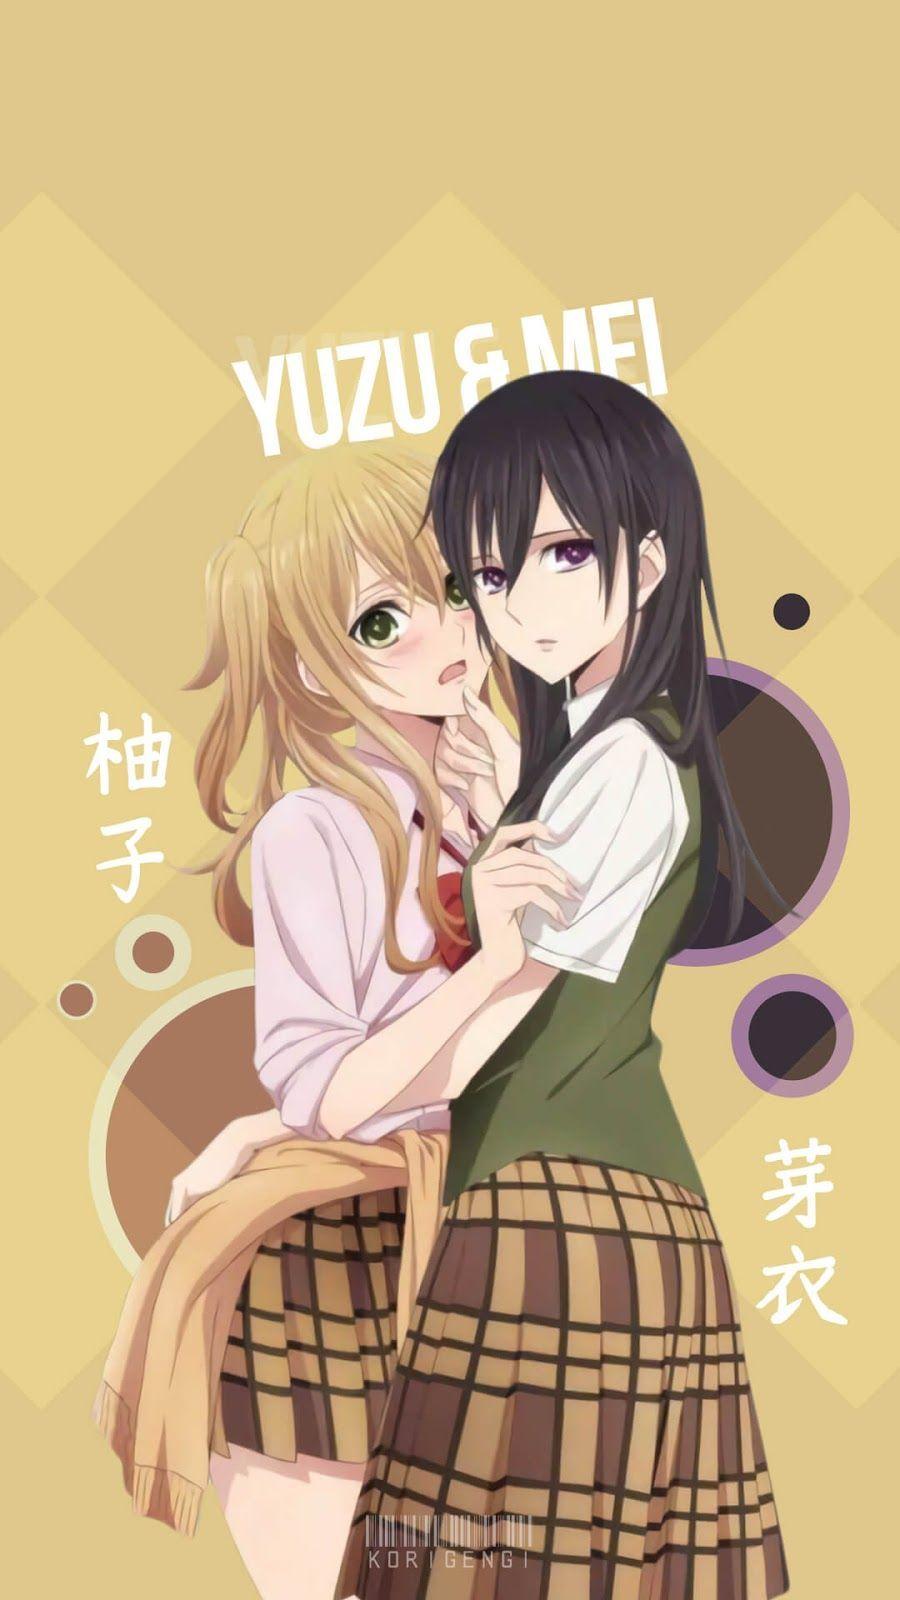 Yuzu & Mei Anime Wallpaper. Anime, Wallpaper and Yuri